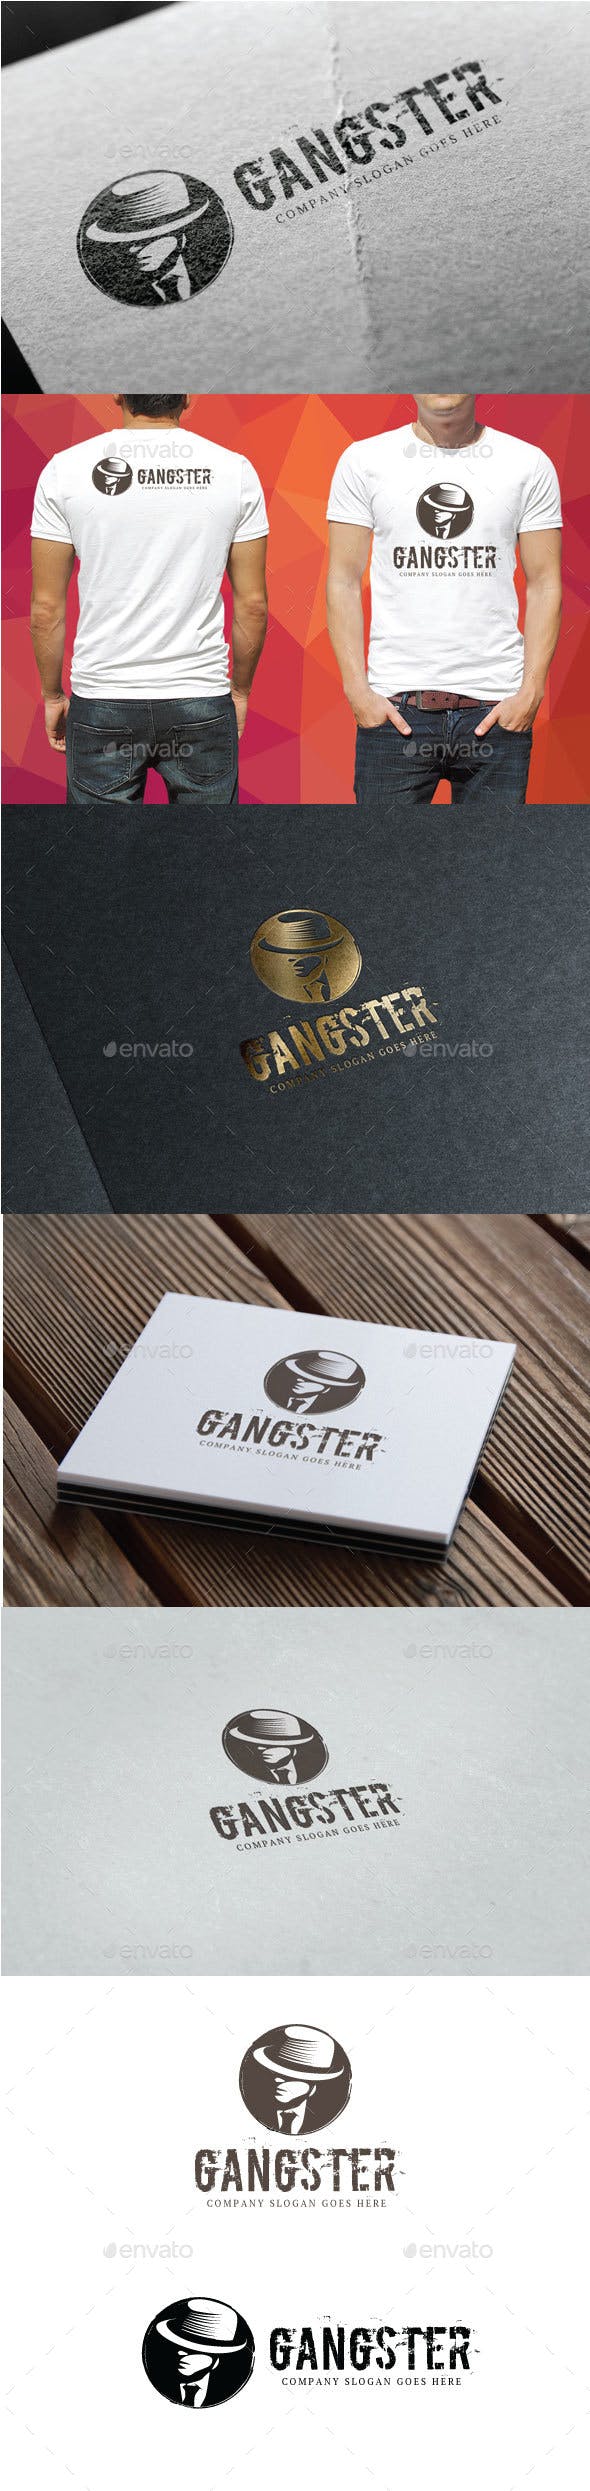 Ganster Logo - Gangster Logo by Goodigital | GraphicRiver